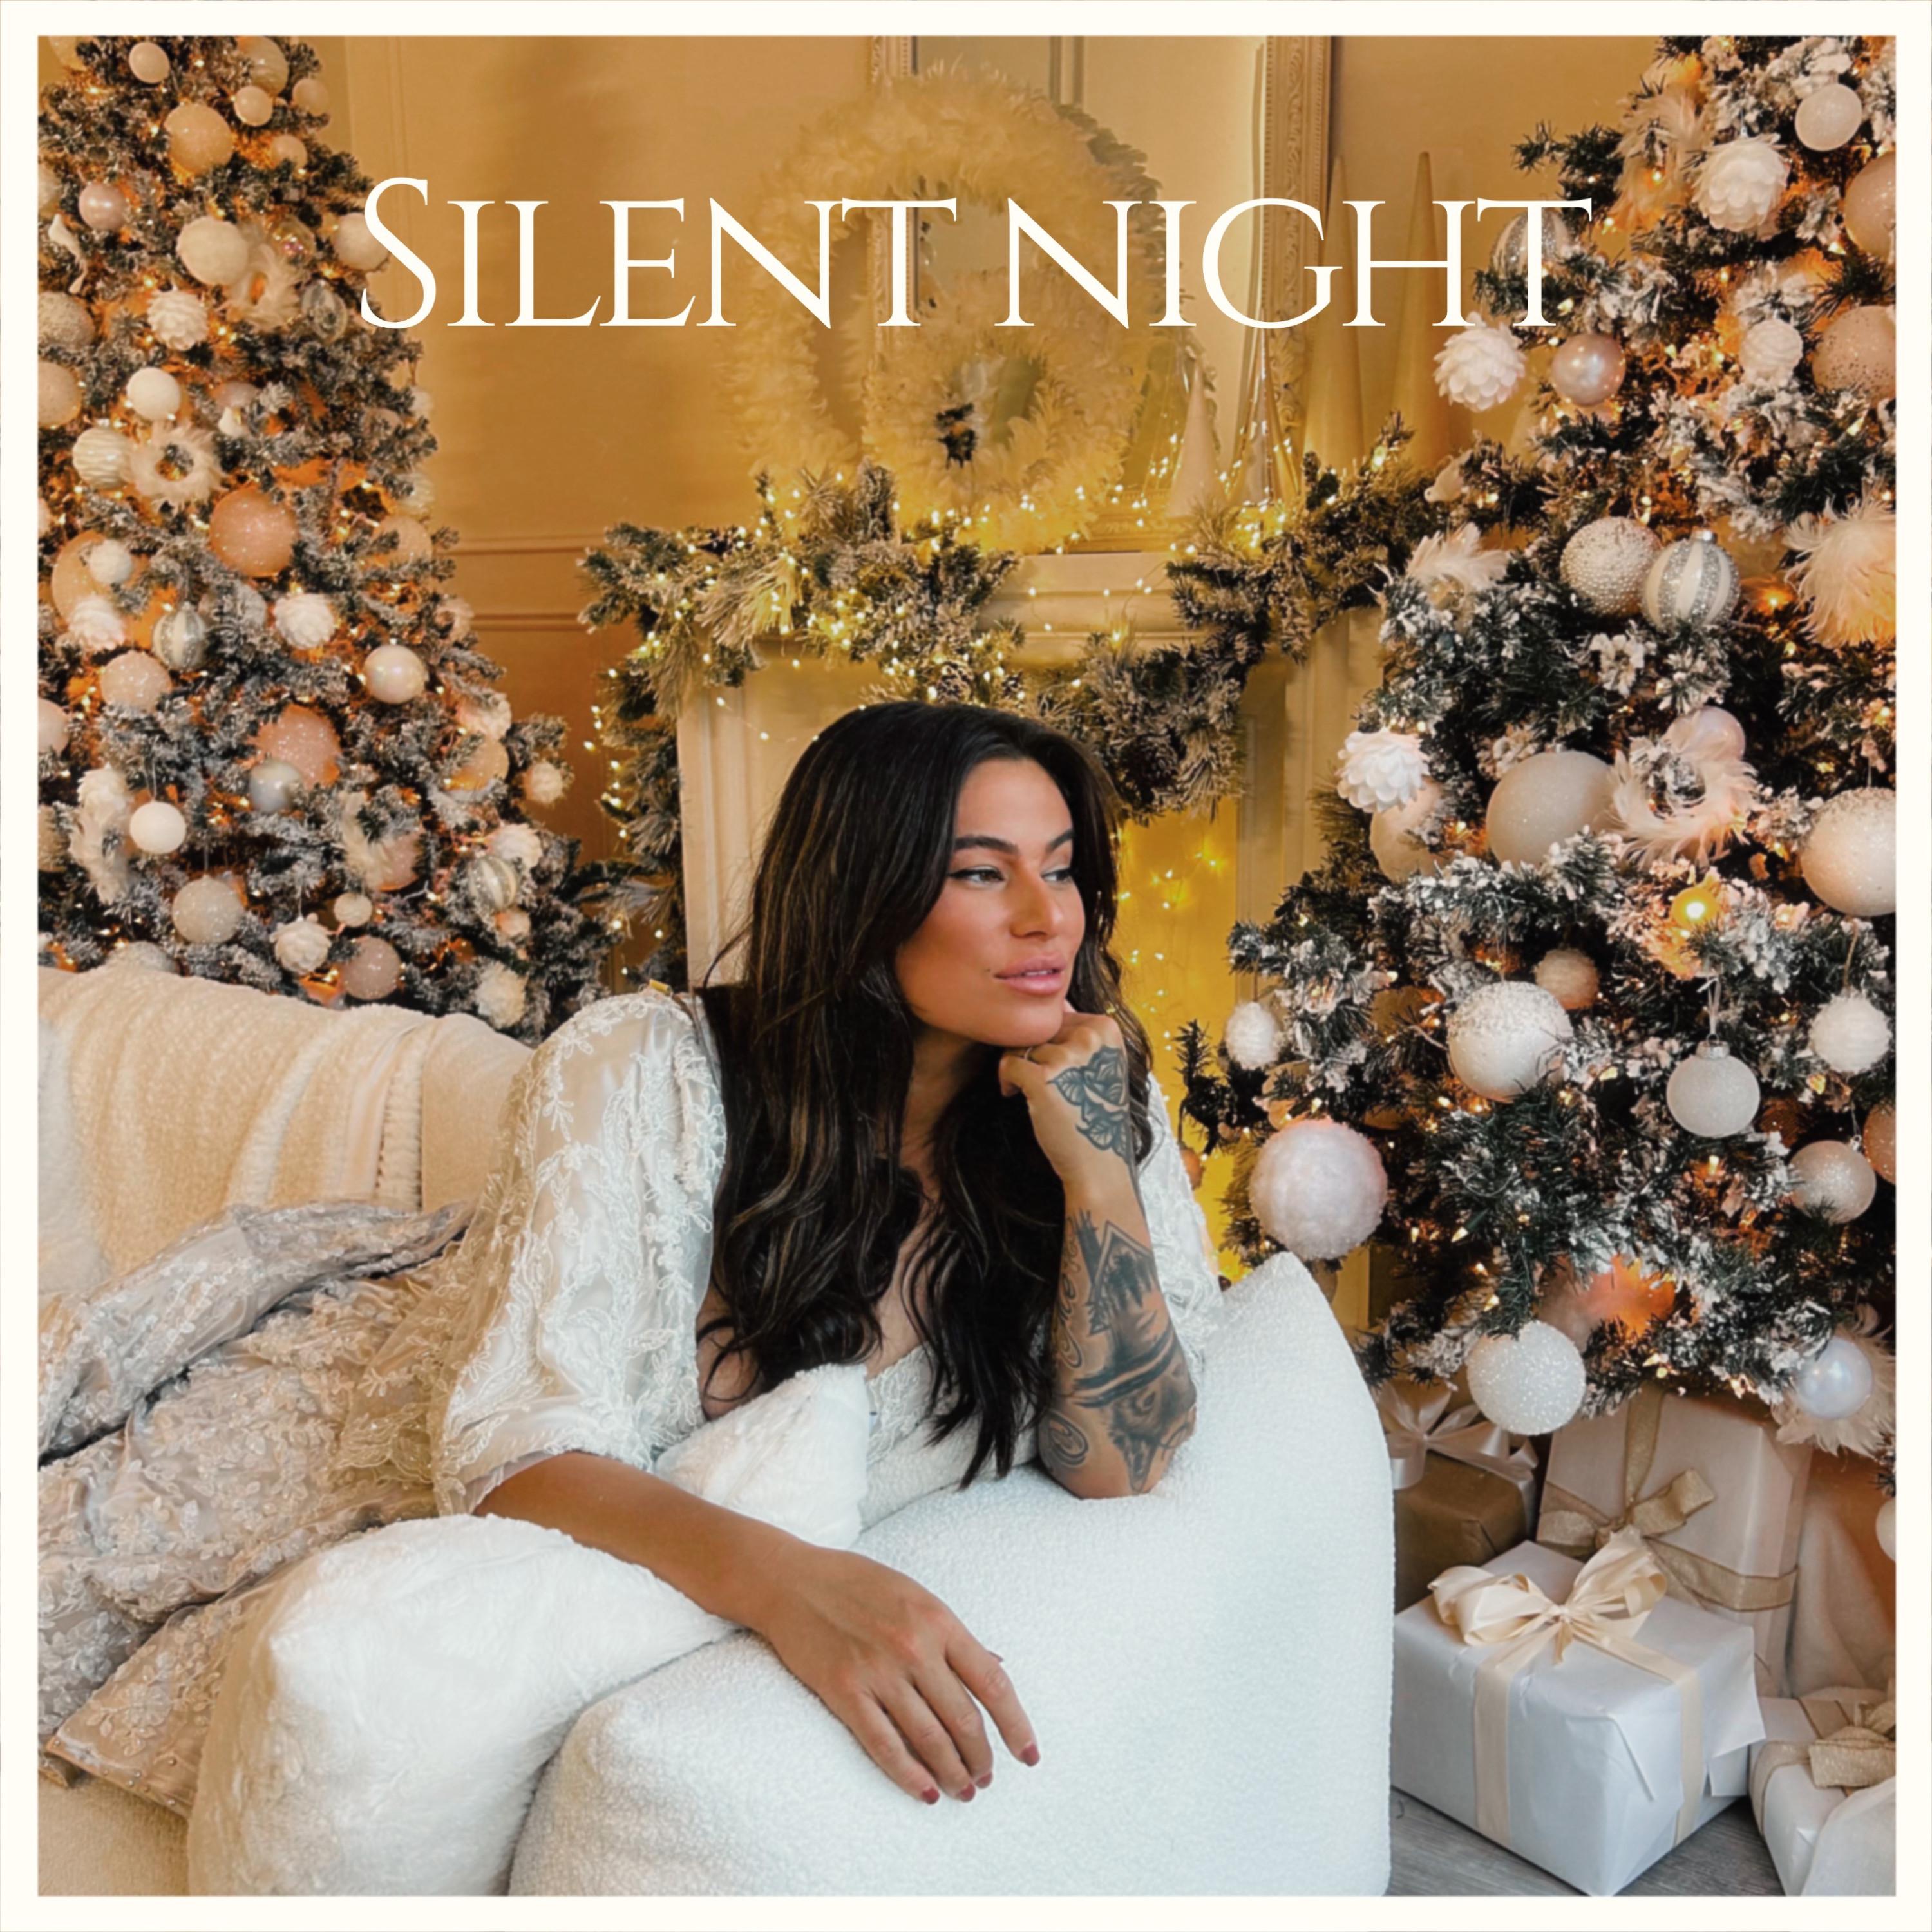 Shawnee Kish - Silent Night